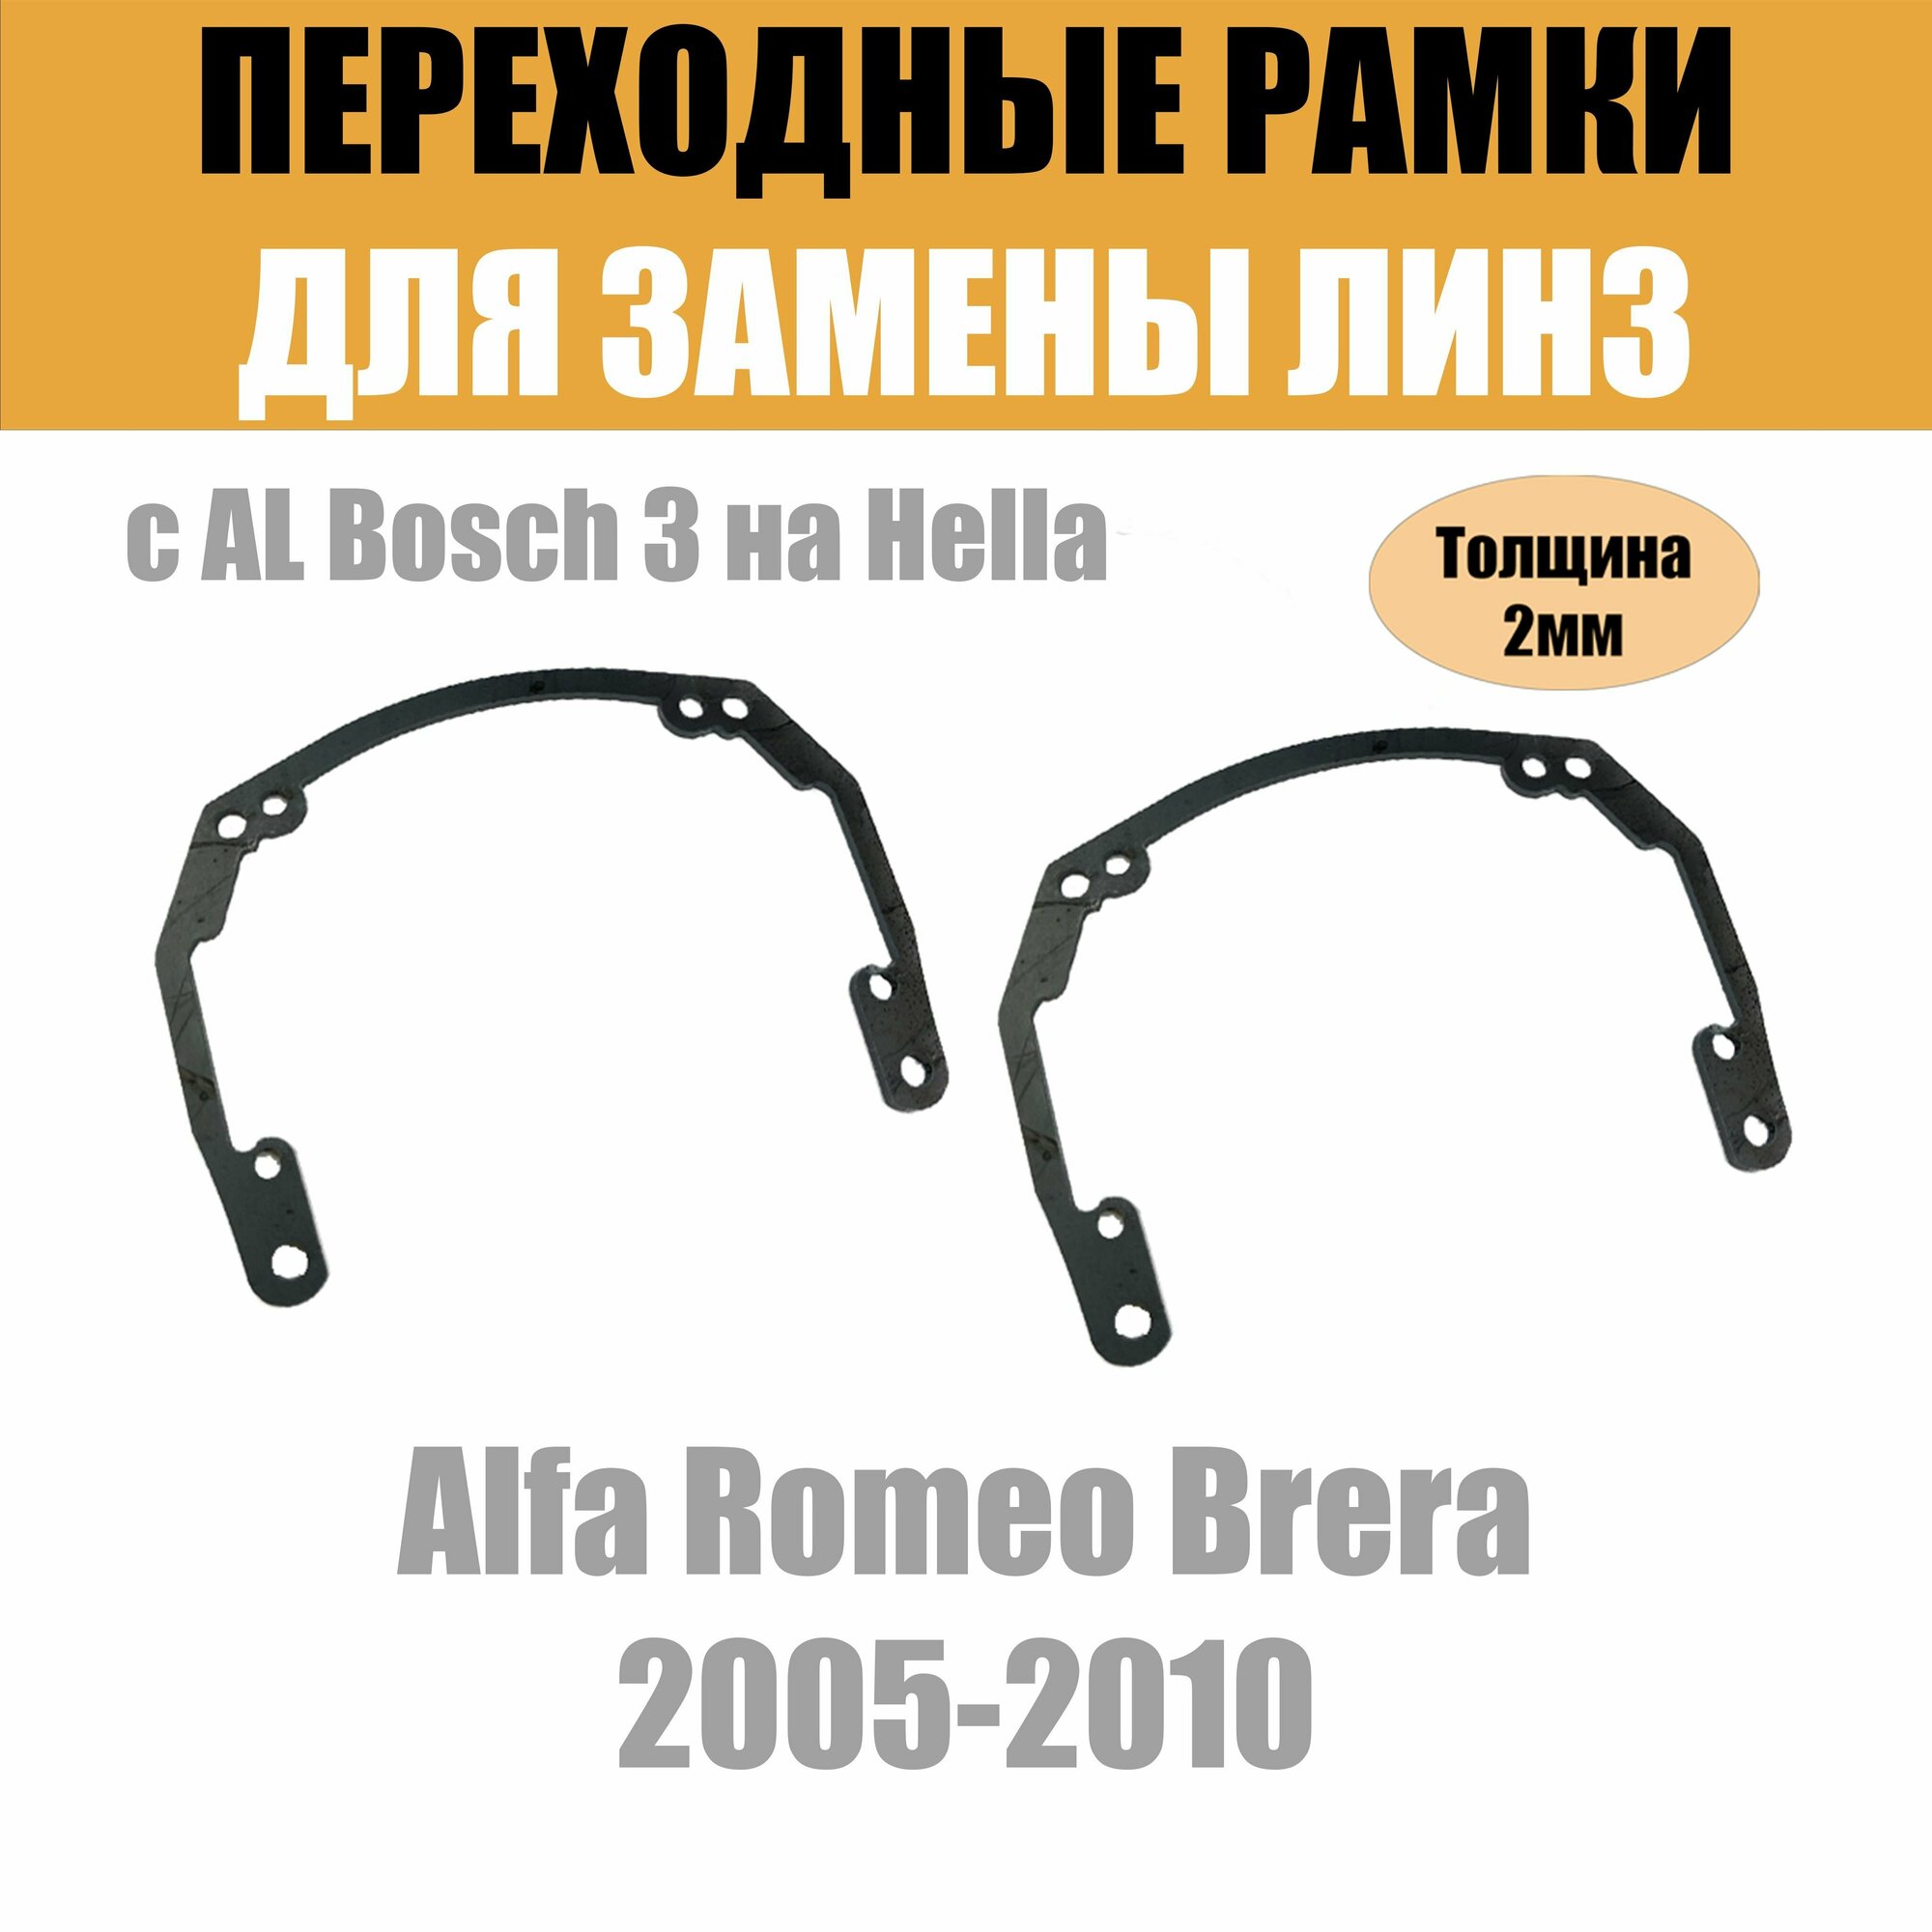 Переходные рамки для Alfa Romeo Brera 2005-2010 под модуль Hella 3R/Hella 3 (Комплект, 2шт)